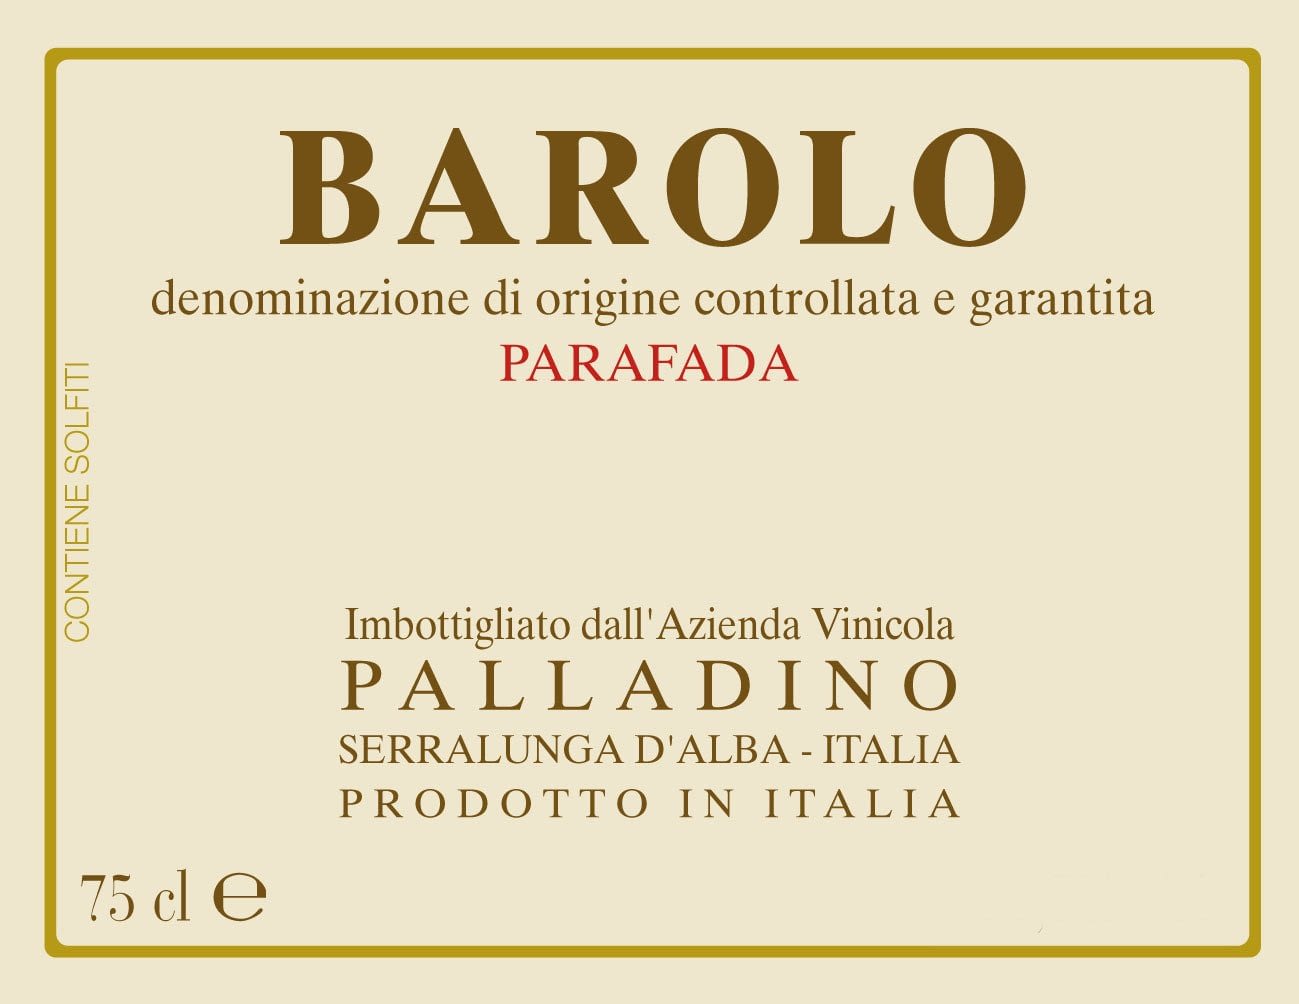 Palladino Barolo Parafada 2009